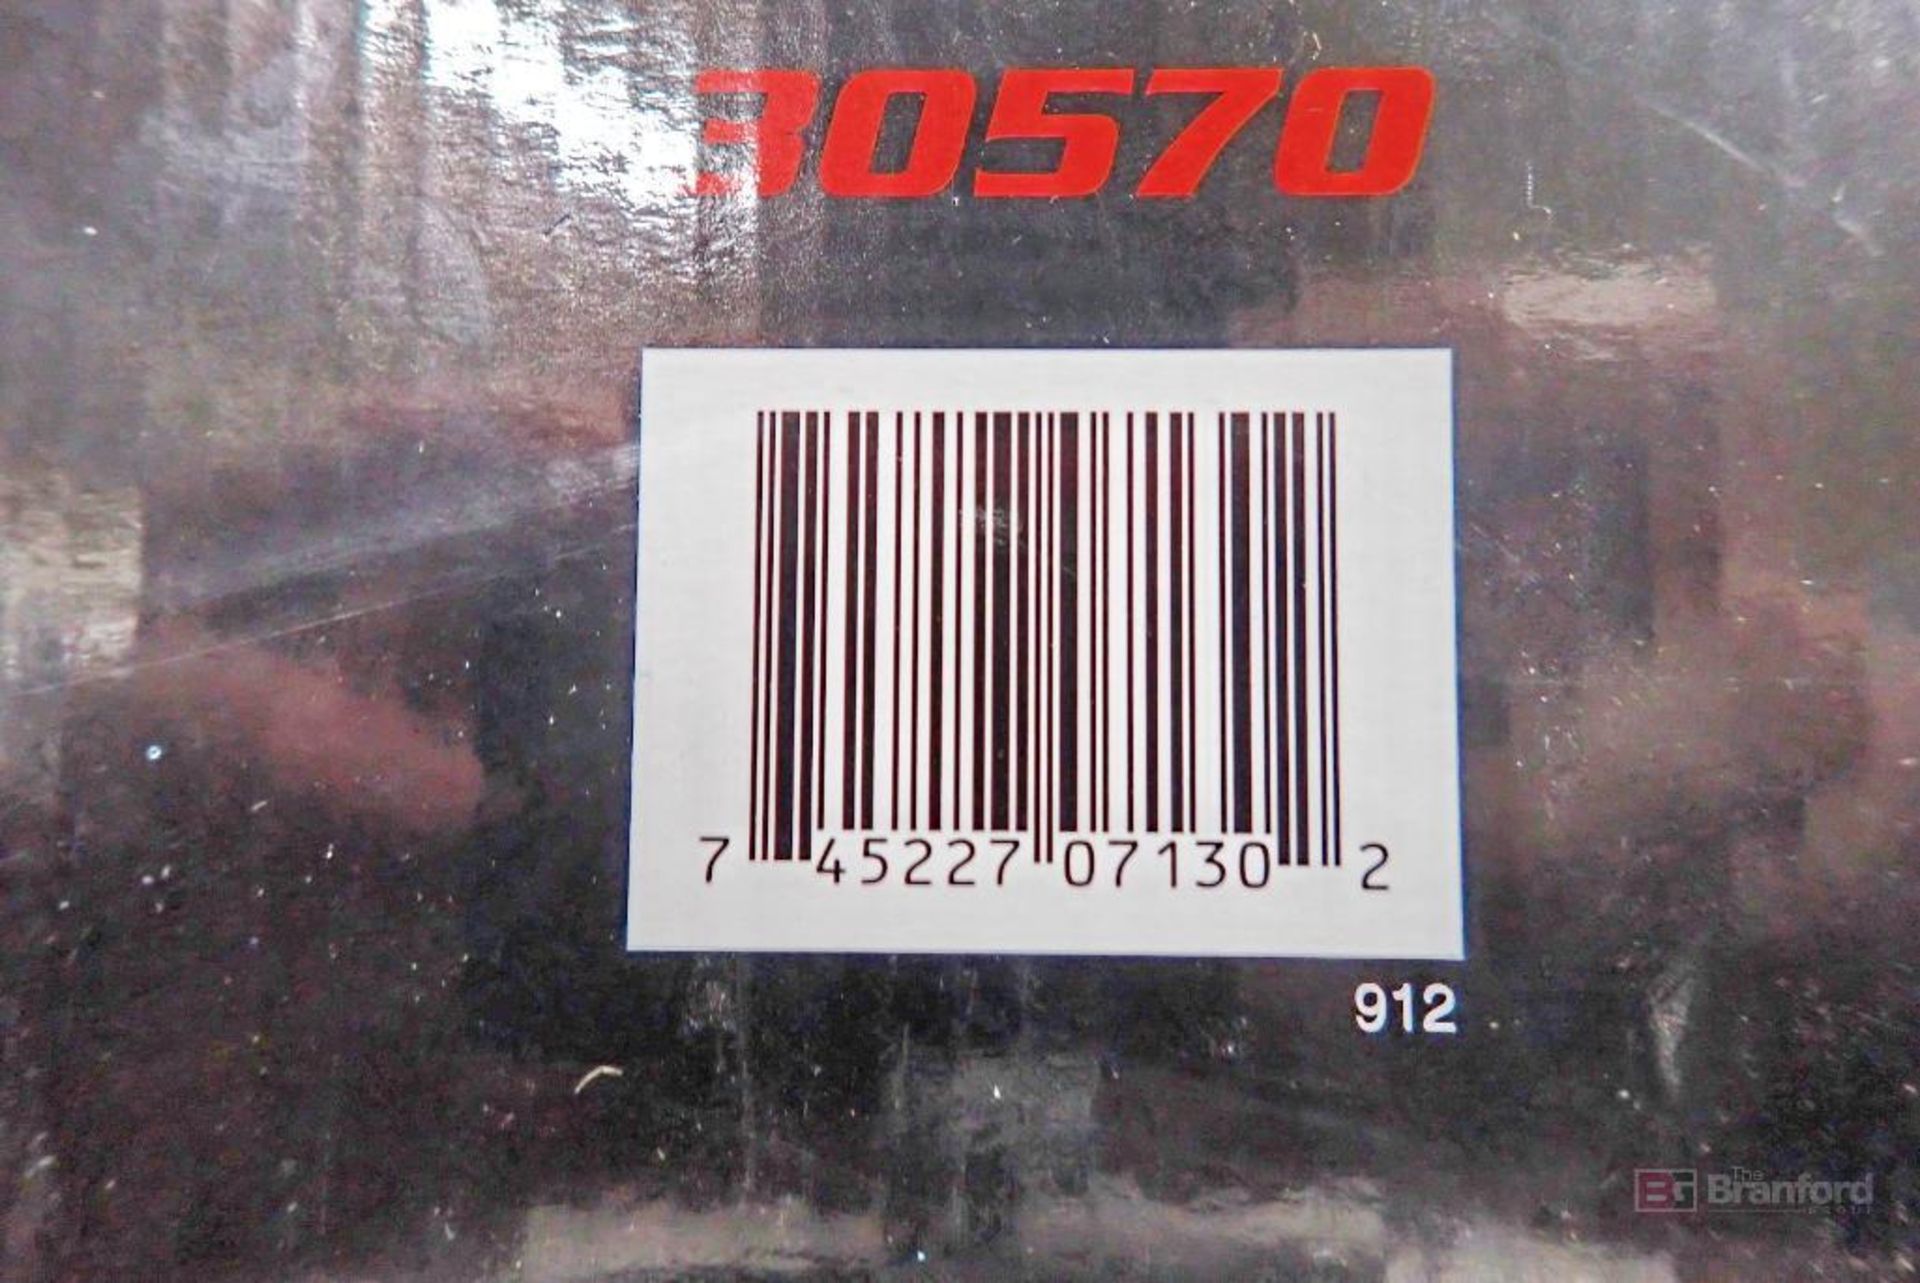 Astro 30570 20V 7" Brushless Variable Speed Rotary Polisher - Image 5 of 5